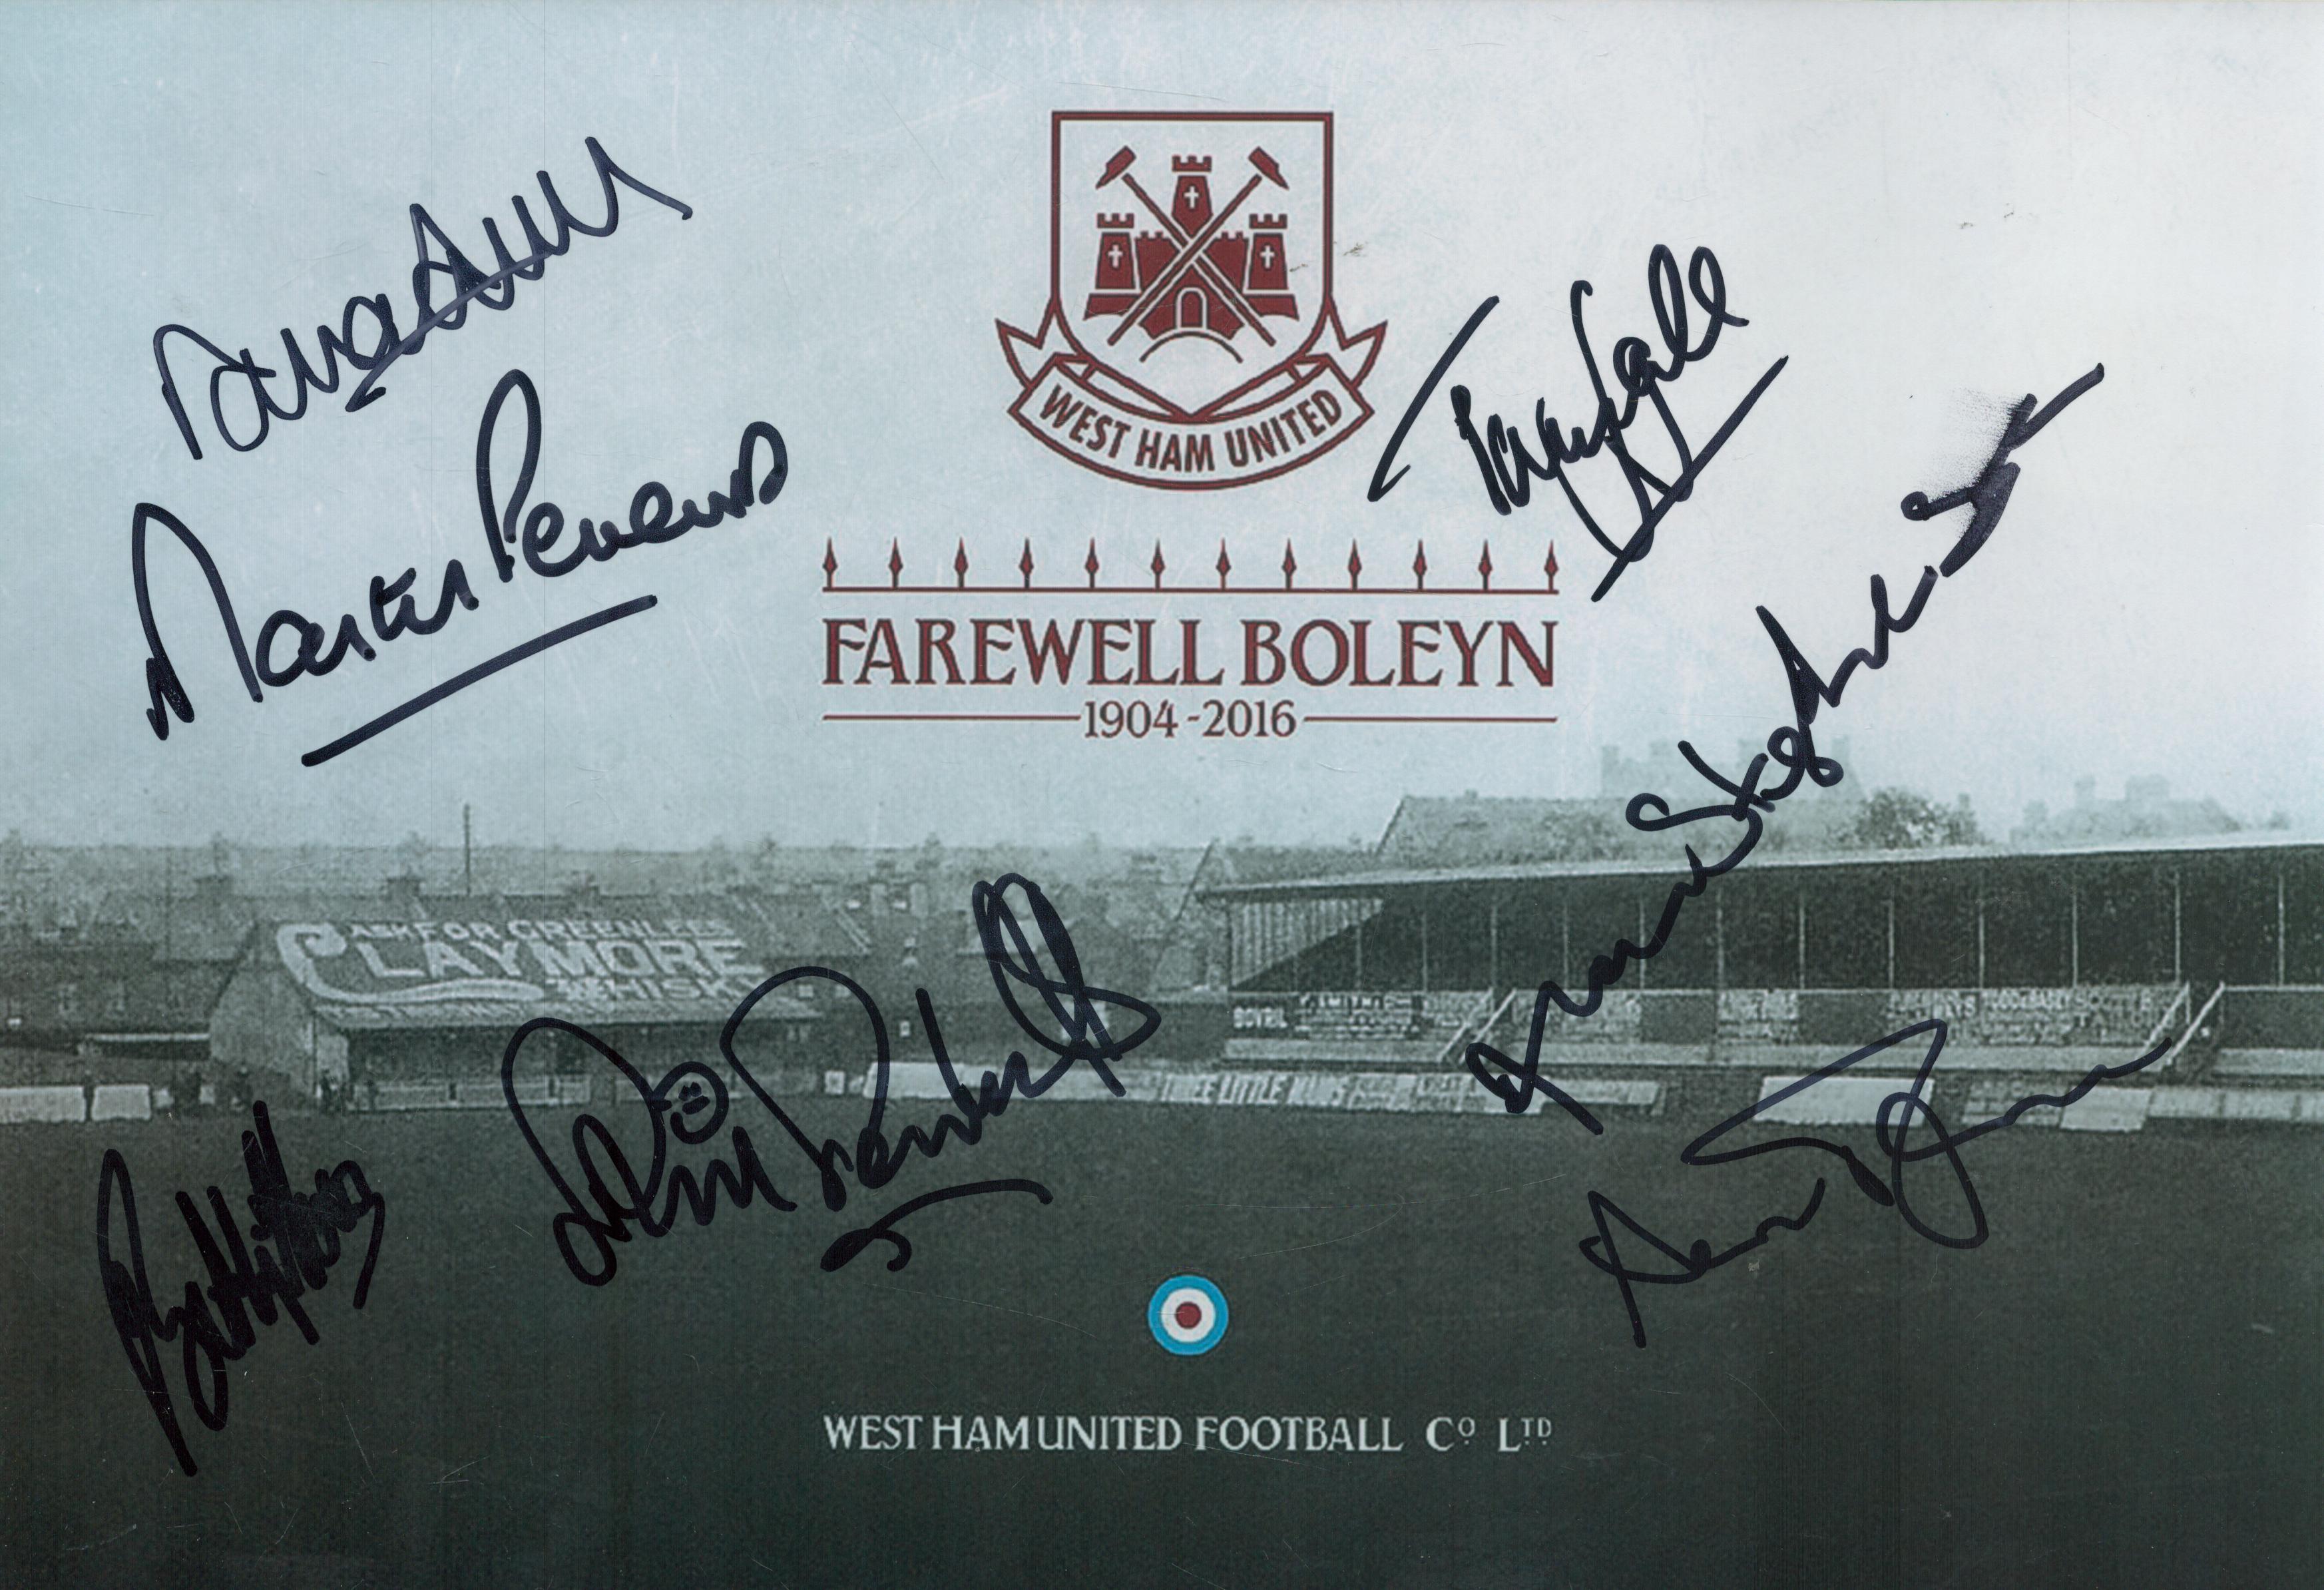 West Ham Legends Farewell Boleyn 1904-2016 multi signed photo includes Hammer greats such as Alvin